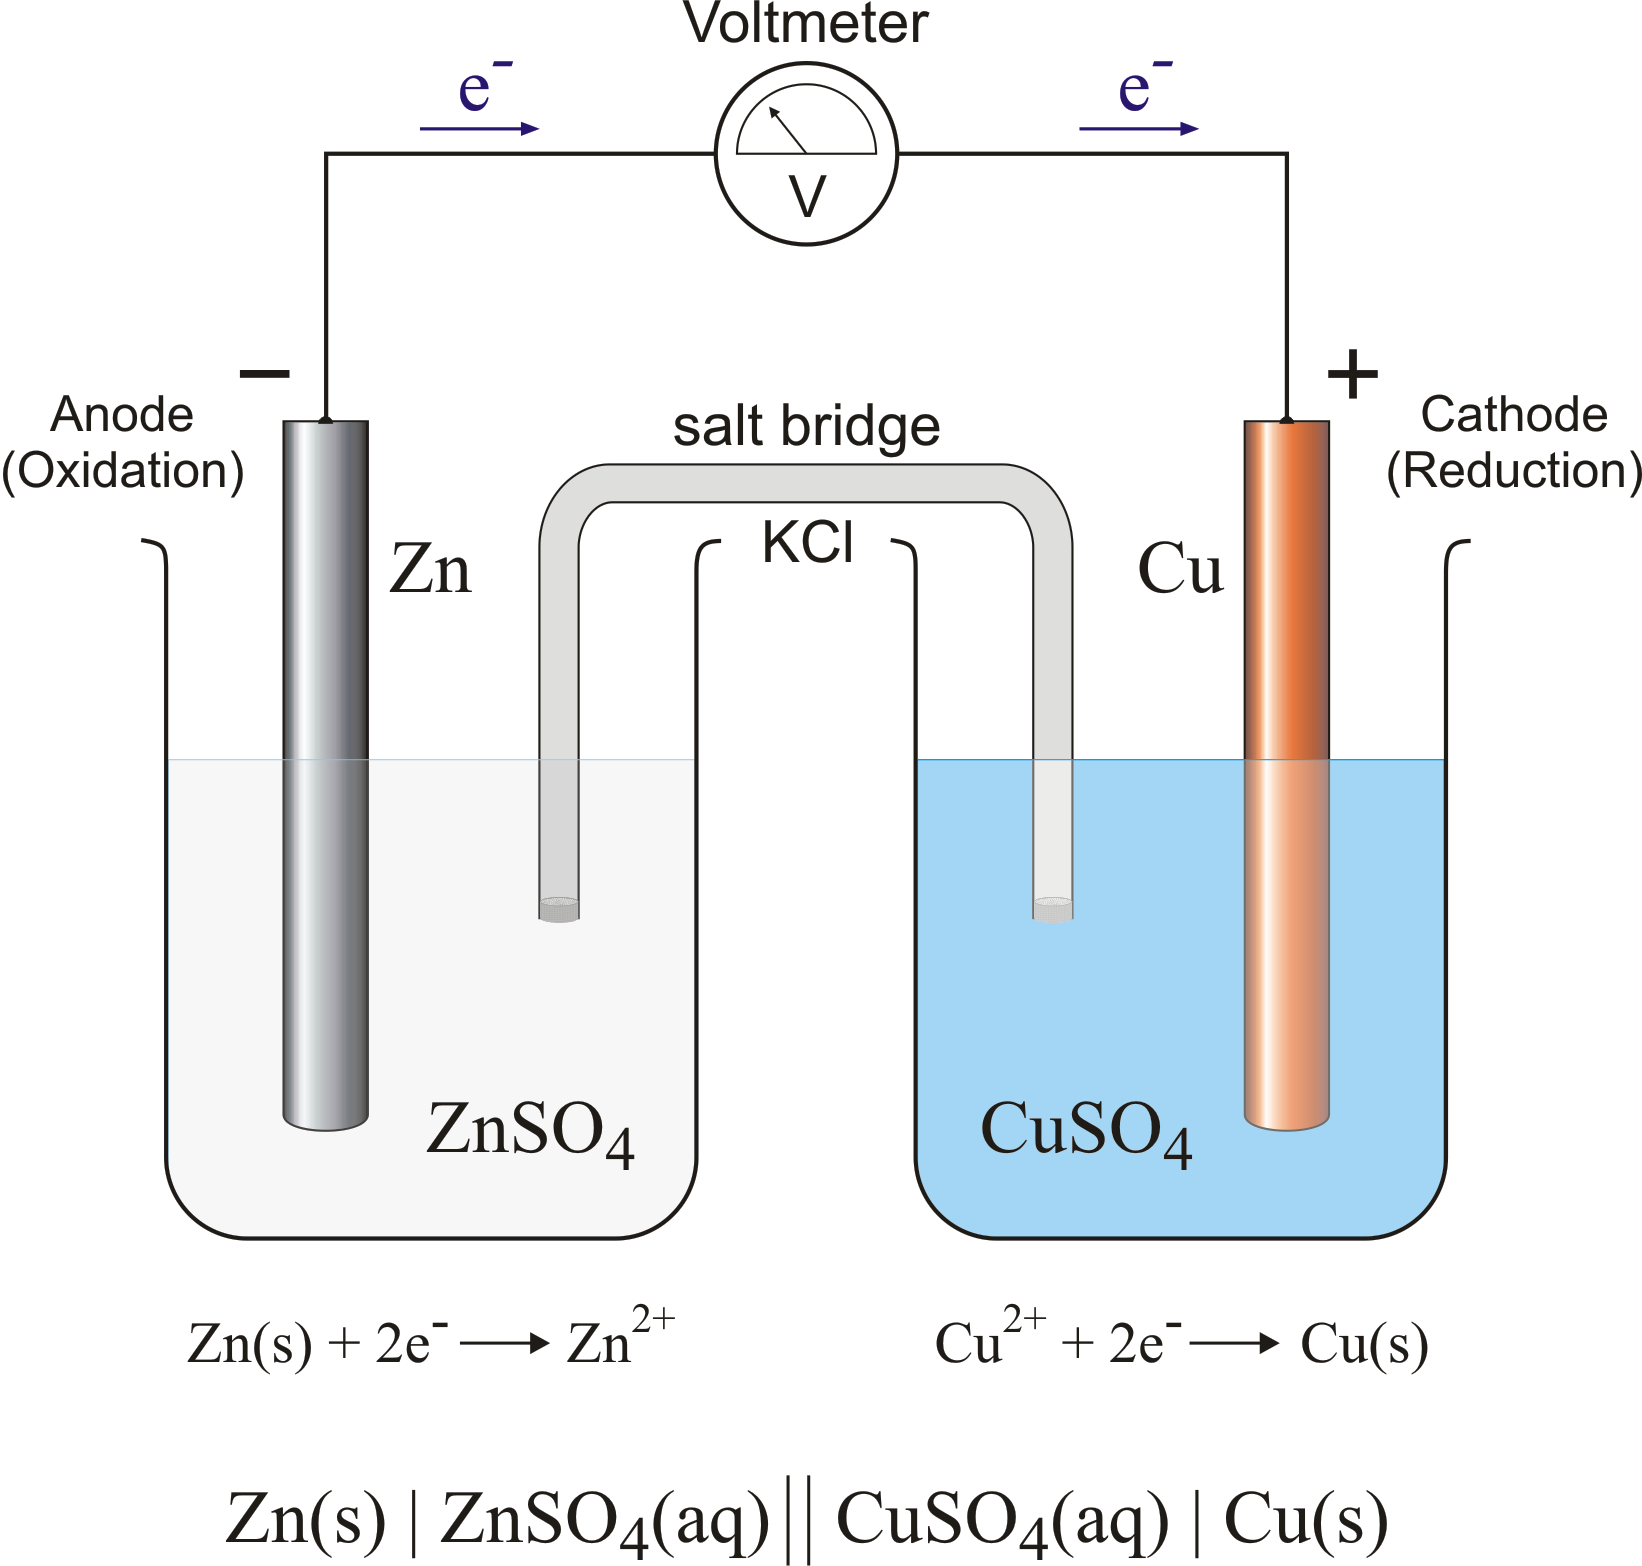 <p>should include…</p><ul><li><p>1 molar zinc nitrate, zinc 2+ ions</p></li><li><p>1 molar copper nitrate, copper 2+ ions</p></li><li><p>ammonium nitrate salt bridge</p></li><li><p>electrolytes, solutions, voltmeter</p></li><li><p>show movement of the ions and electrons</p></li><li><p>LABEL: anode (neg because electron build up), oxidation, salt bridge, cations (towards the cathode), anions (towards the anode), cathode, reduction</p></li></ul>